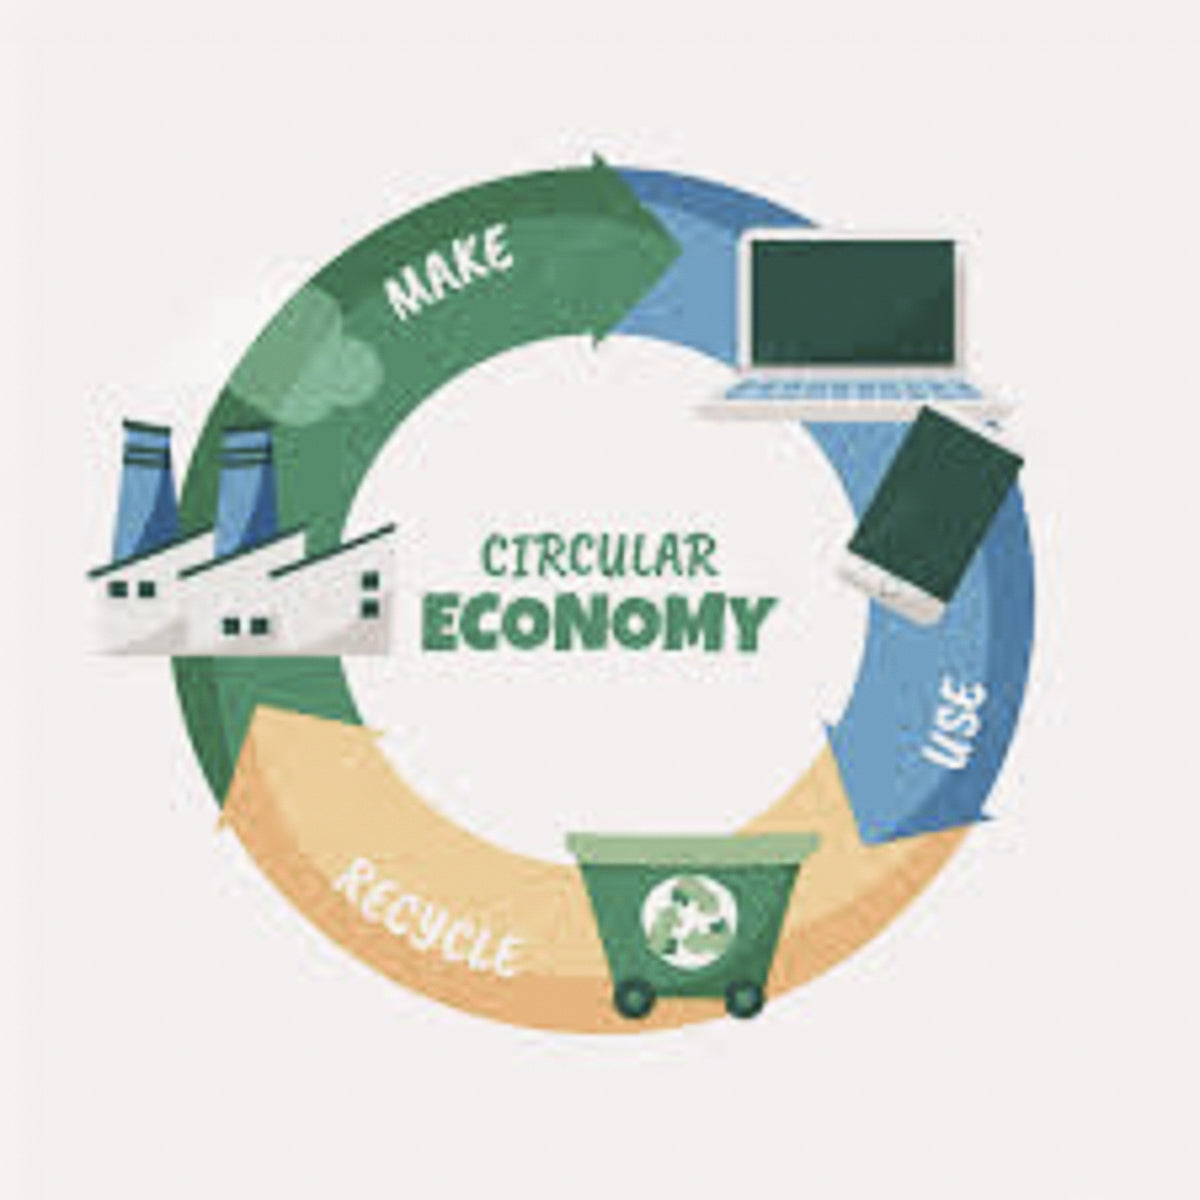 Circular economy graphic image